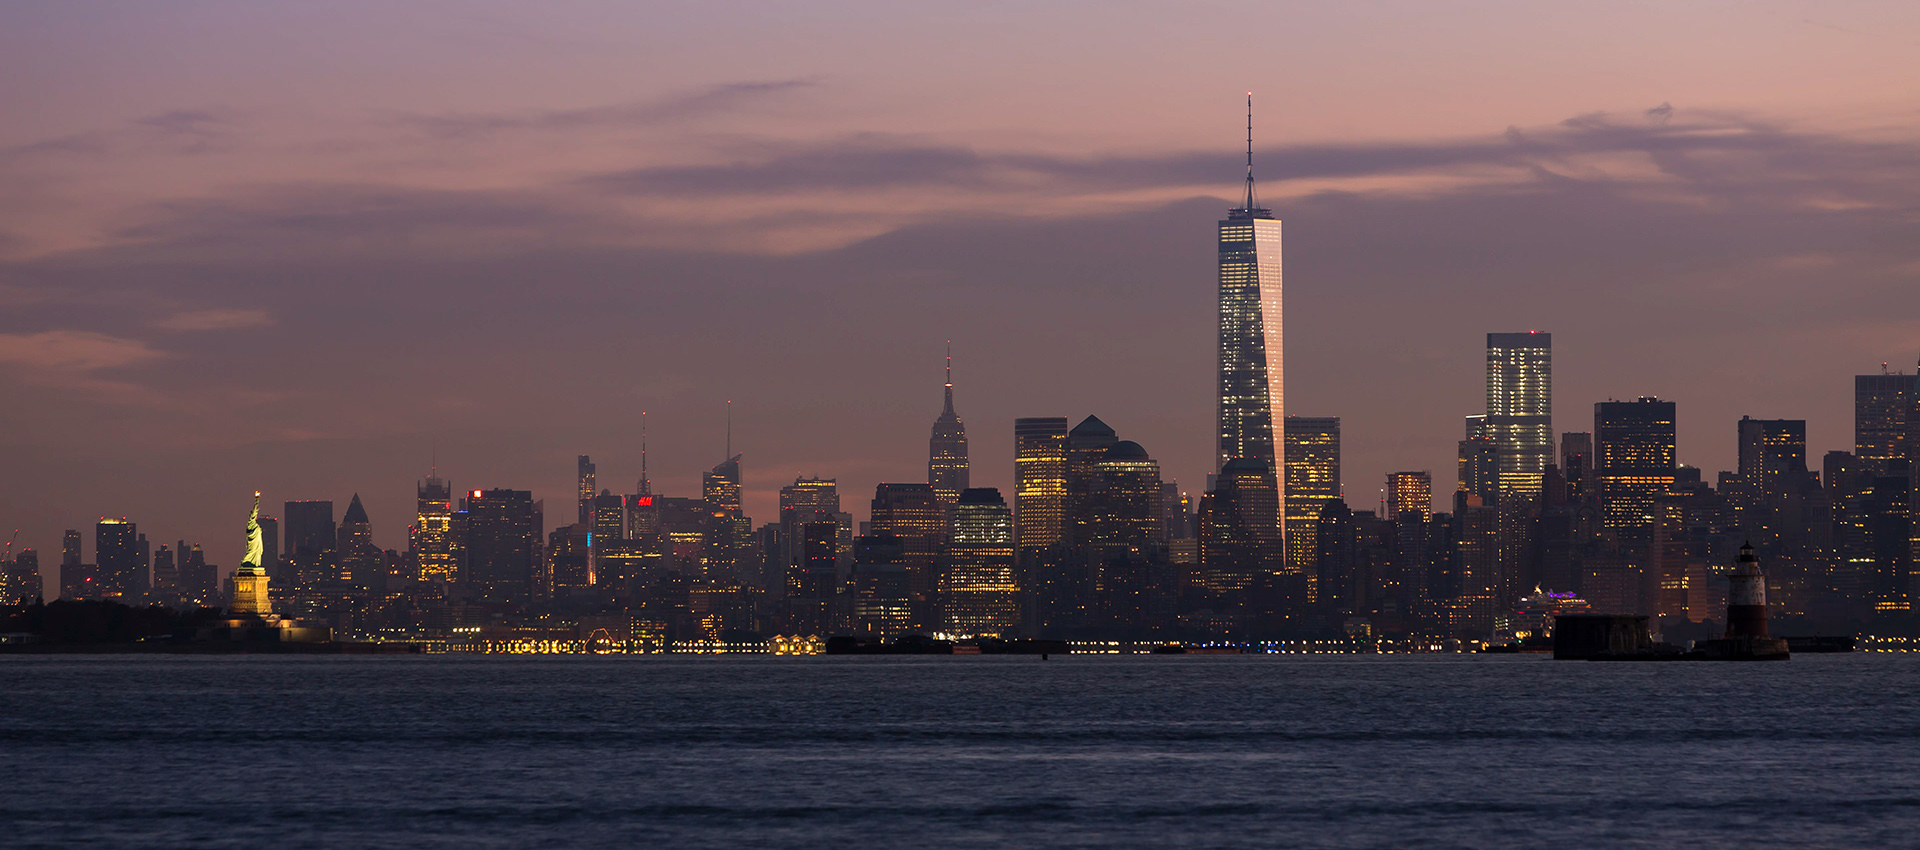 2: New York Skyline with Freedom Tower